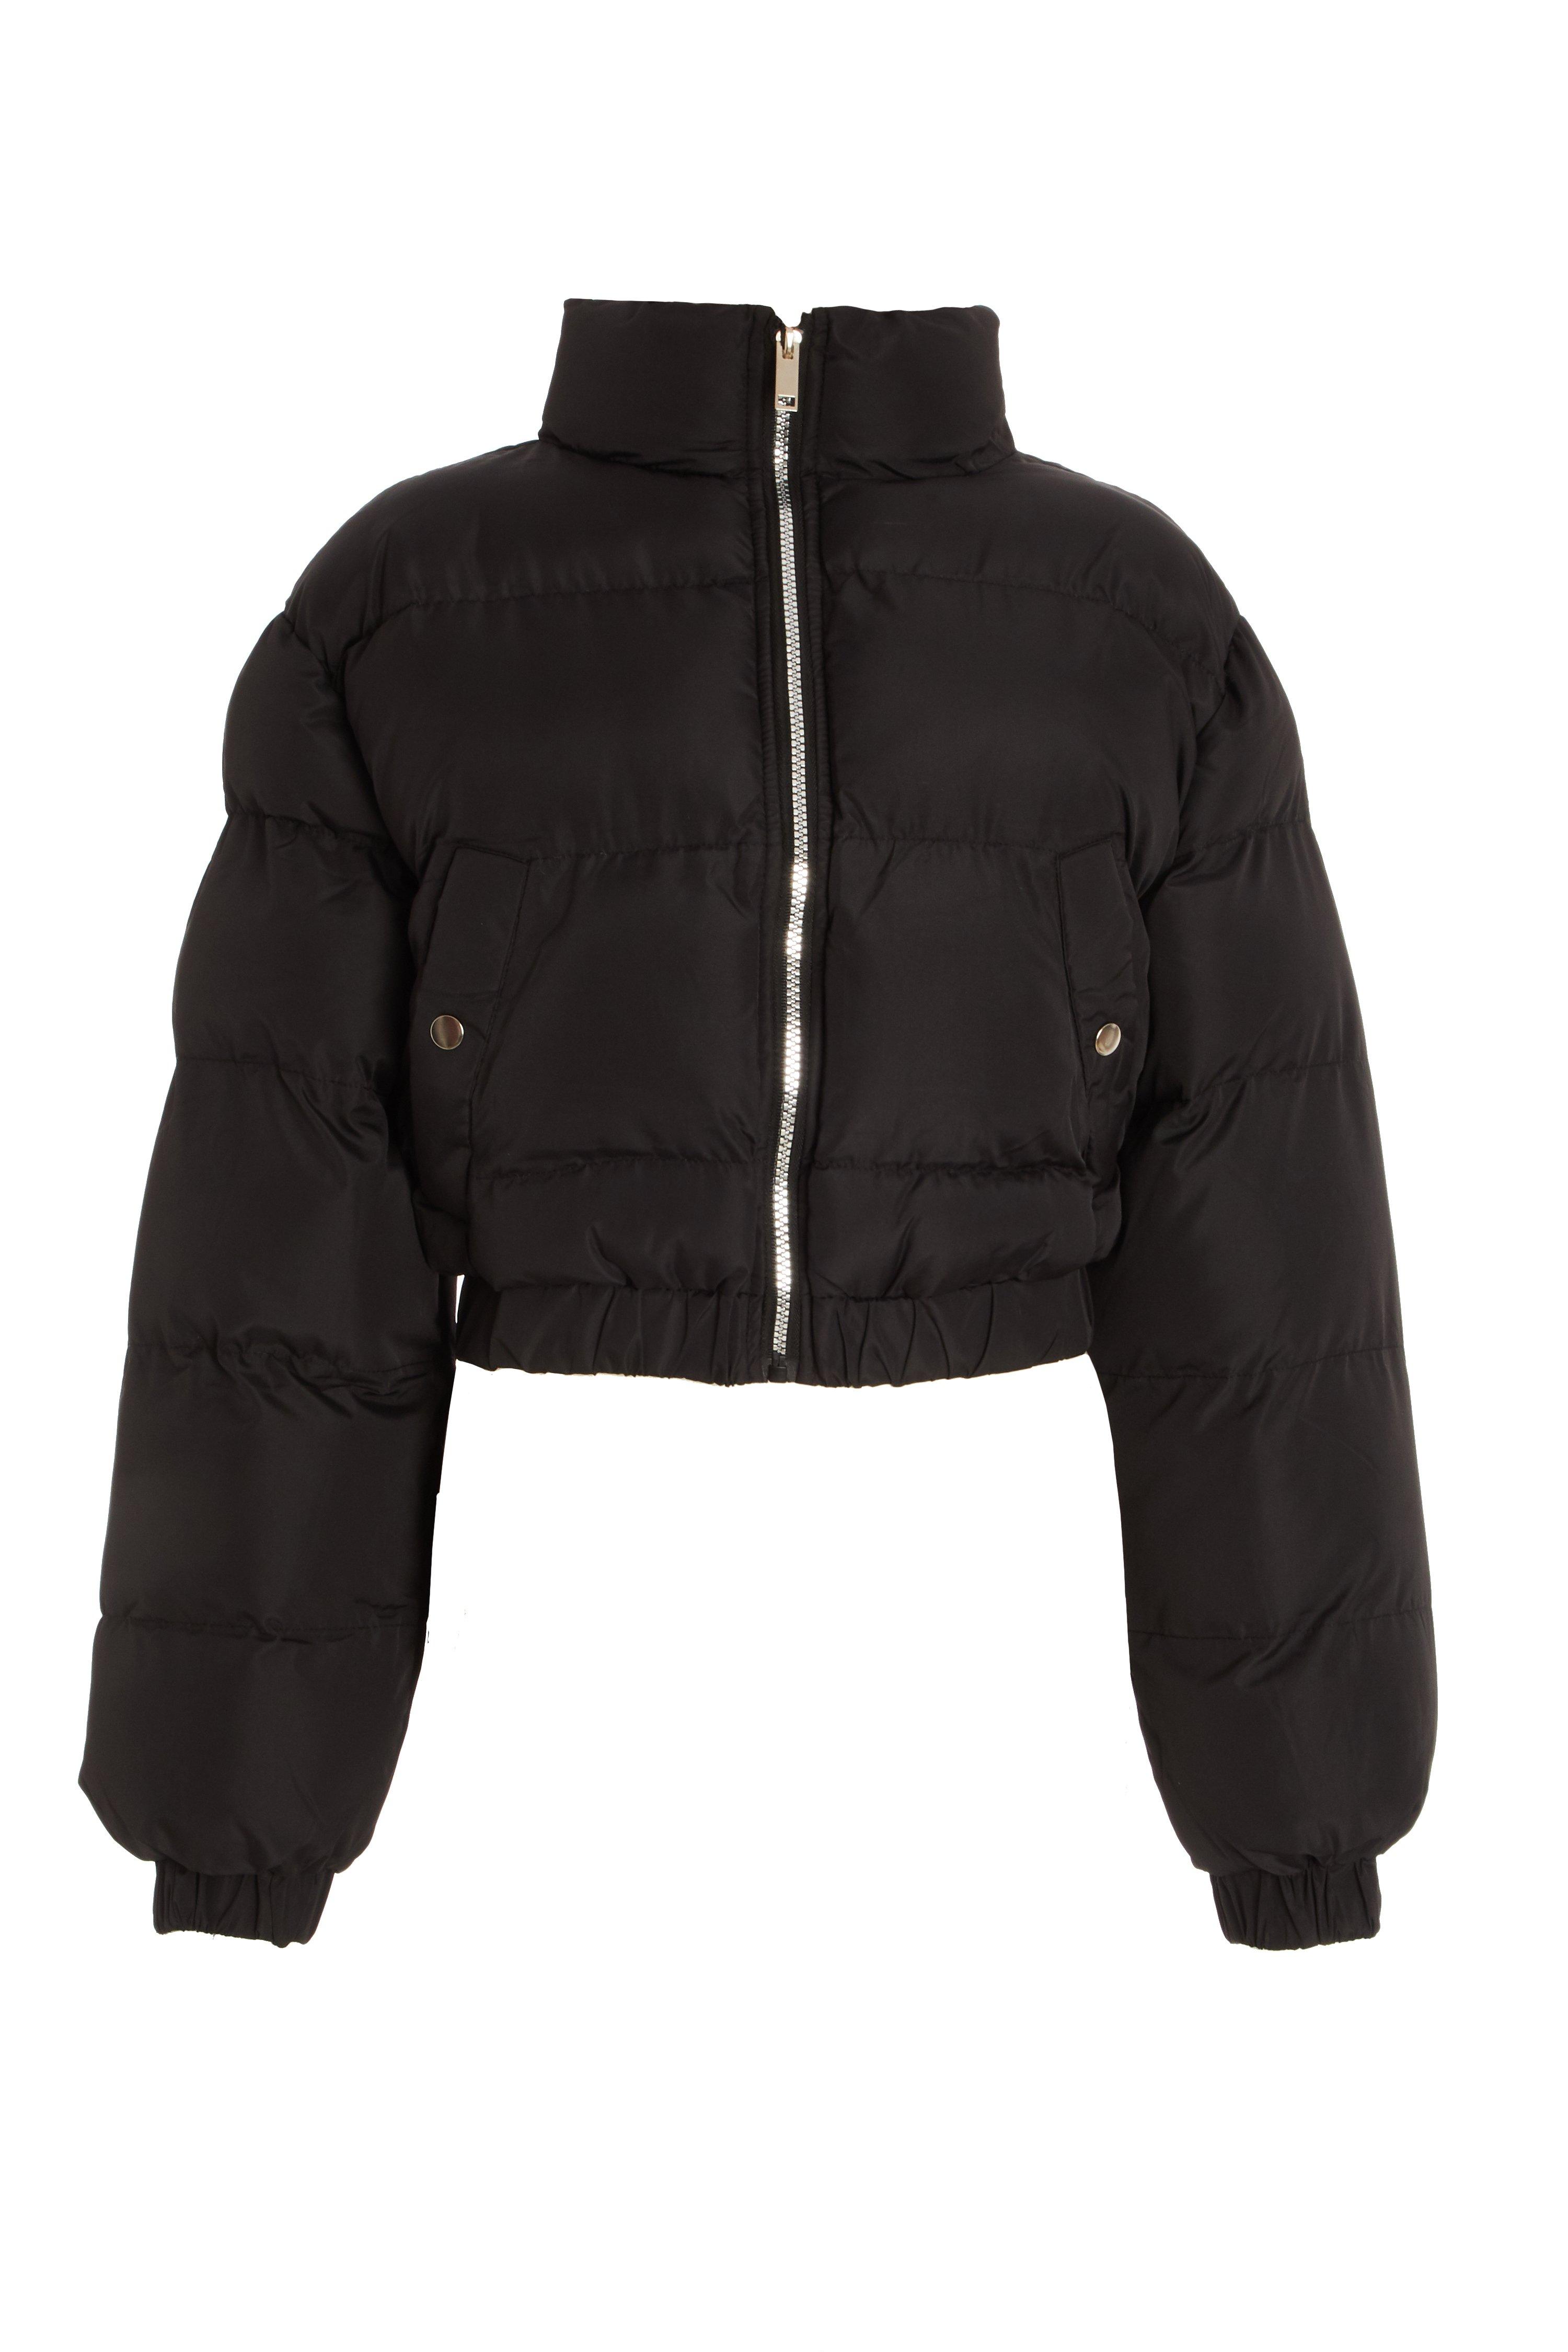 Black Cropped Puffer Jacket - Quiz Clothing